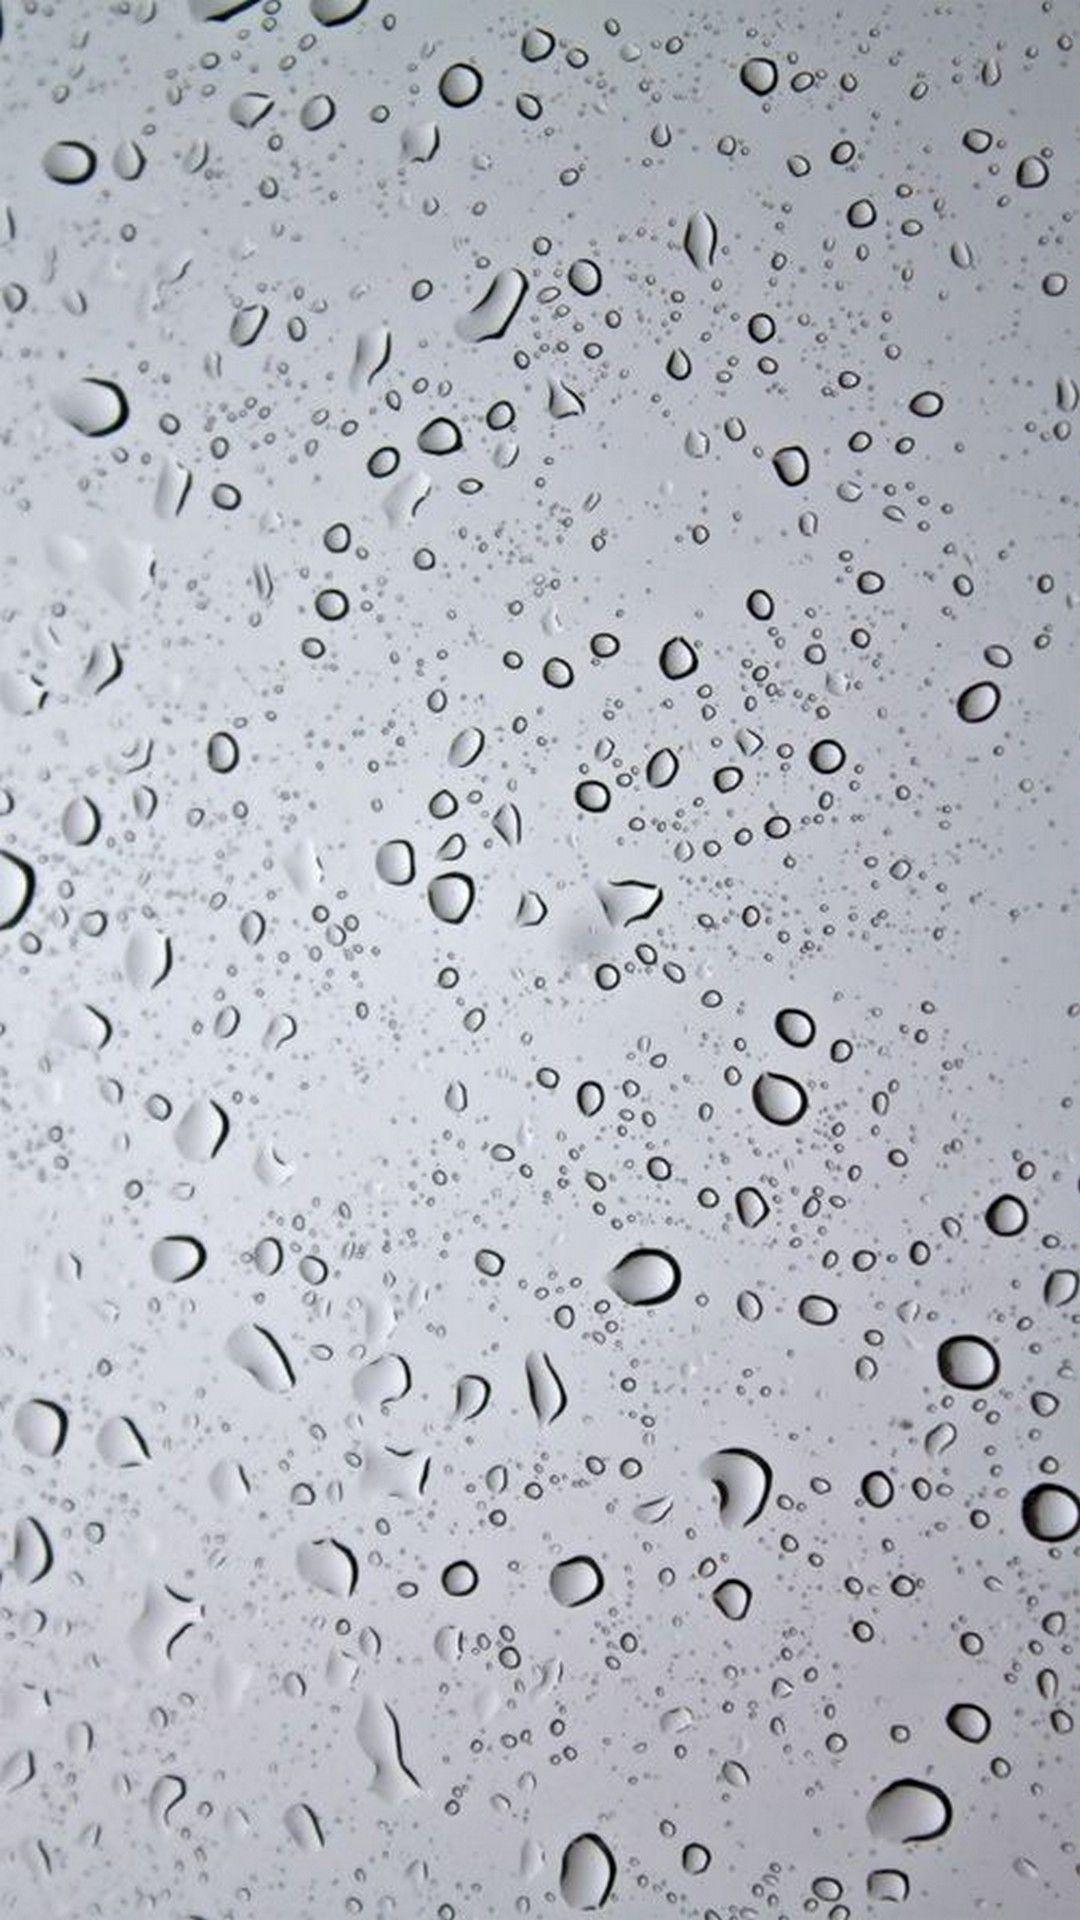 Raindrop Iphone Wallpapers Top Free Raindrop Iphone Backgrounds Wallpaperaccess